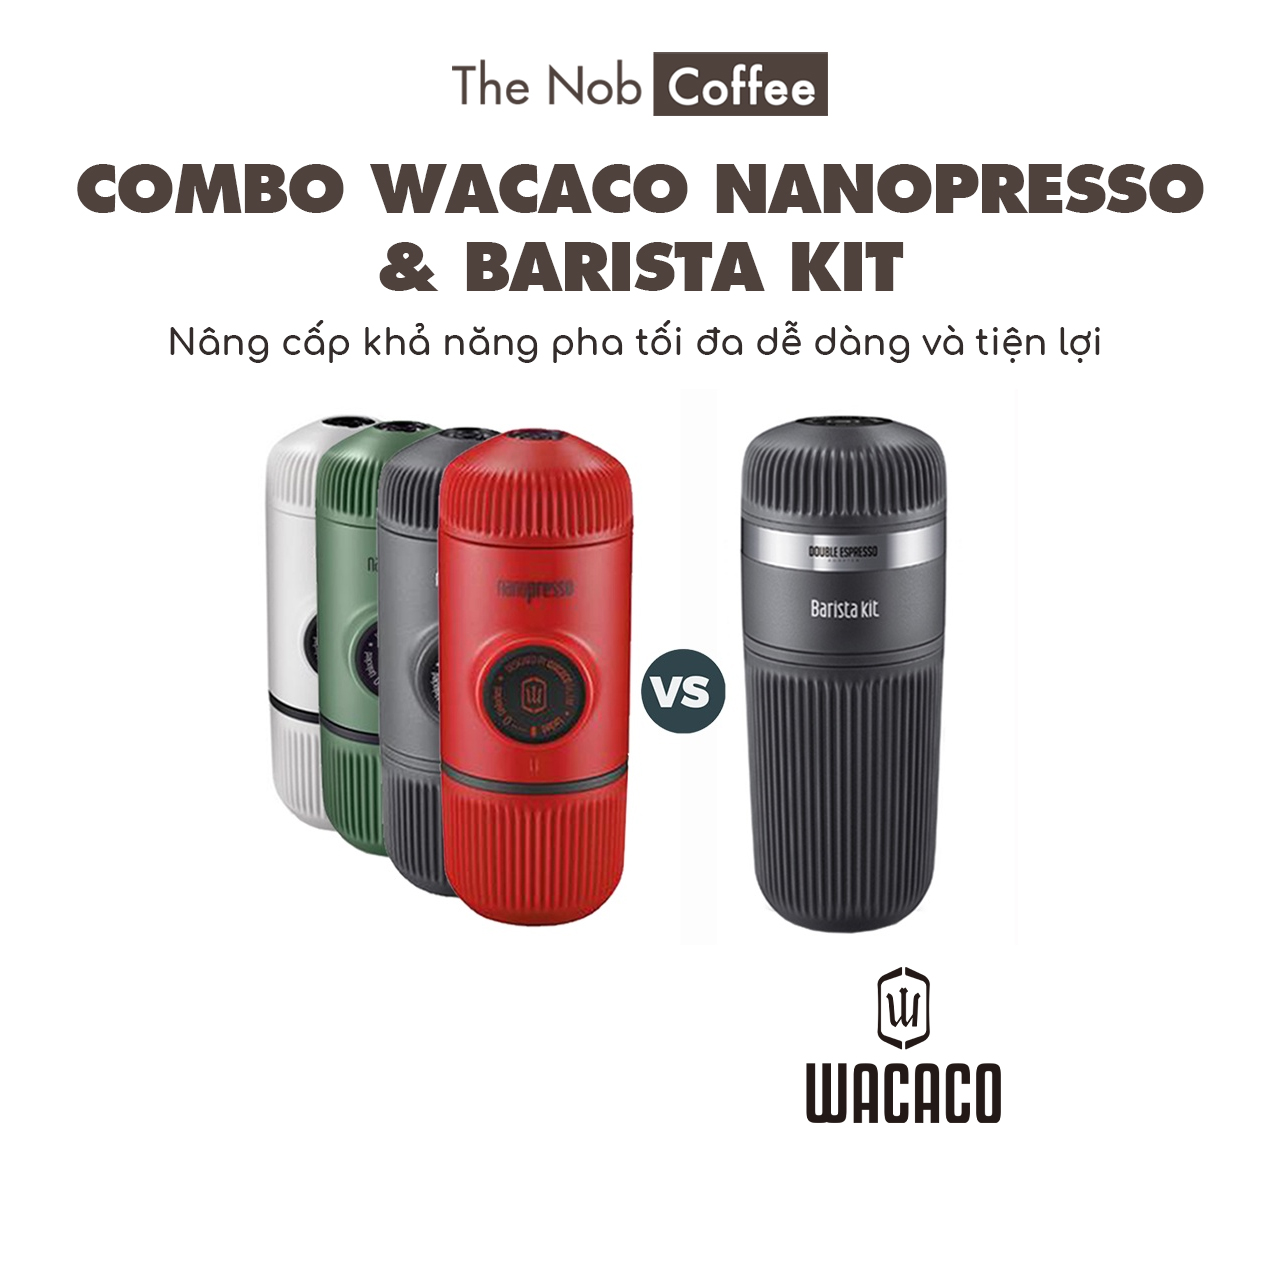 Combo Wacaco Nanopresso và Barista Kit Double Espresso cho máy pha